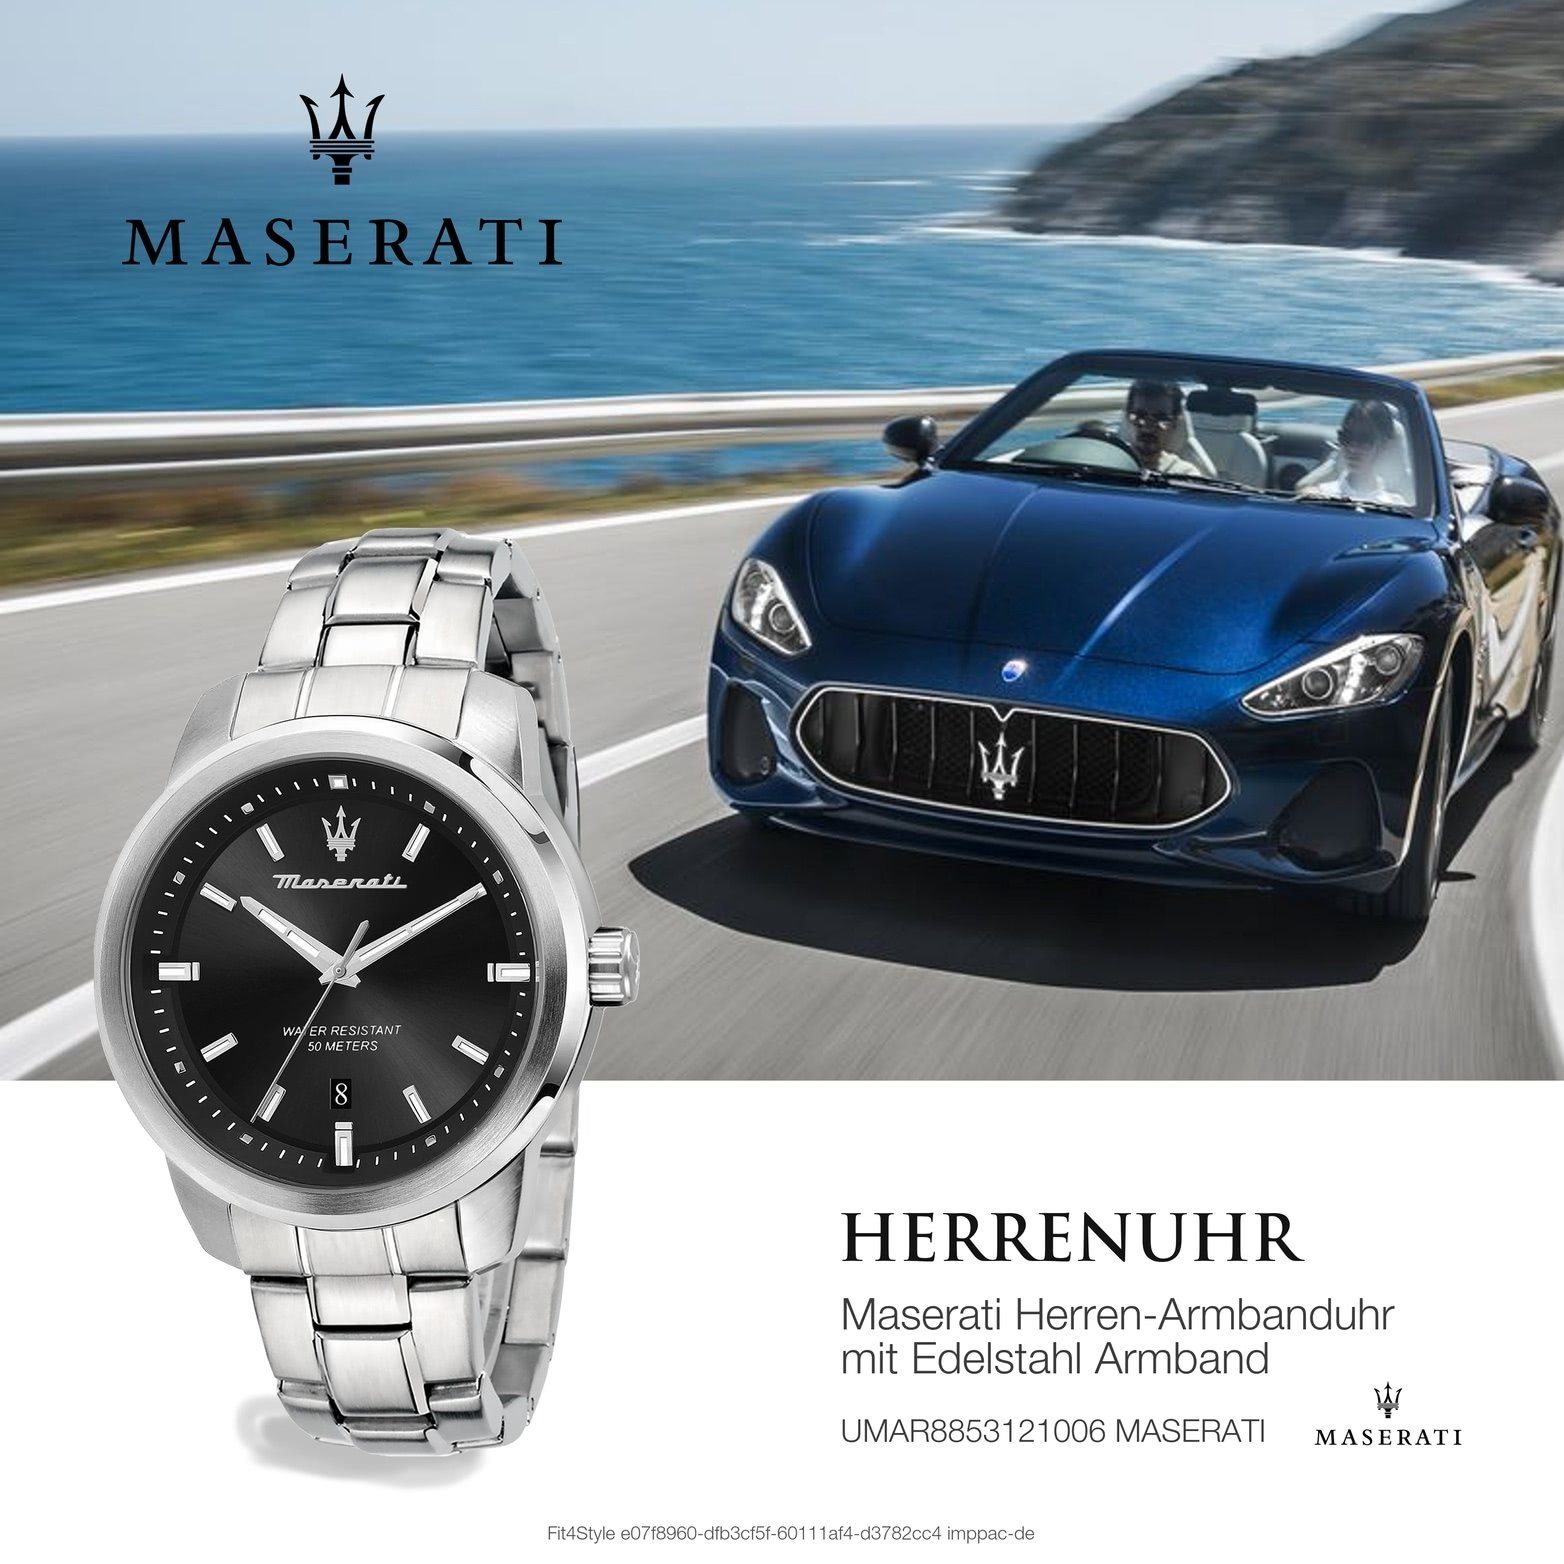 MASERATI Gehäuse, Maserati groß 44mm) rundes Edelstahlarmband, Quarzuhr Edelstahl schwarz Armband-Uhr, (ca. Herrenuhr